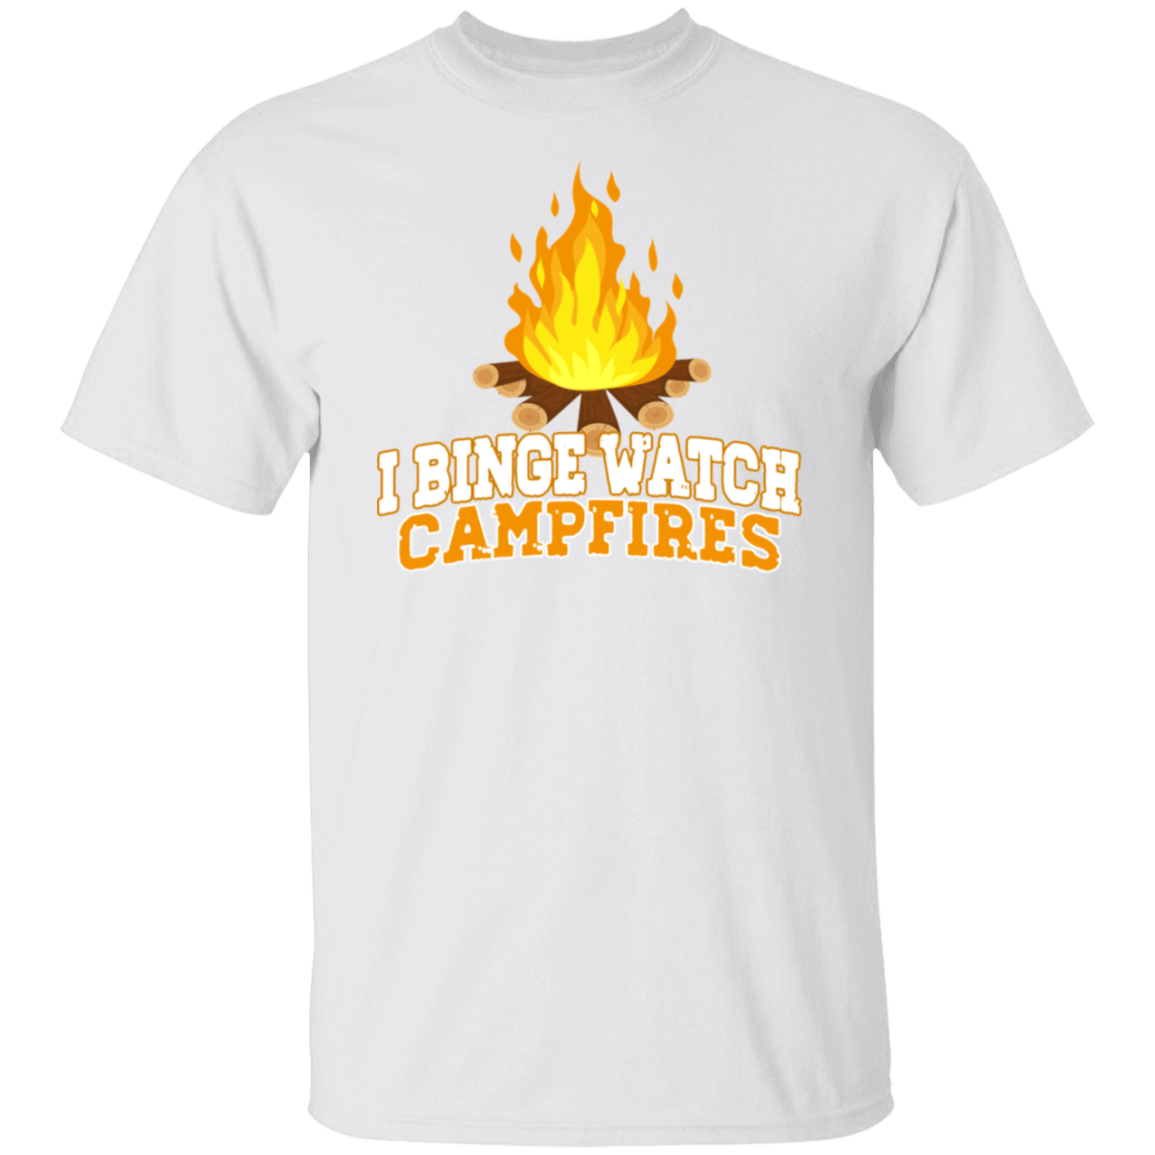 I Binge Watch Campfires T-Shirt